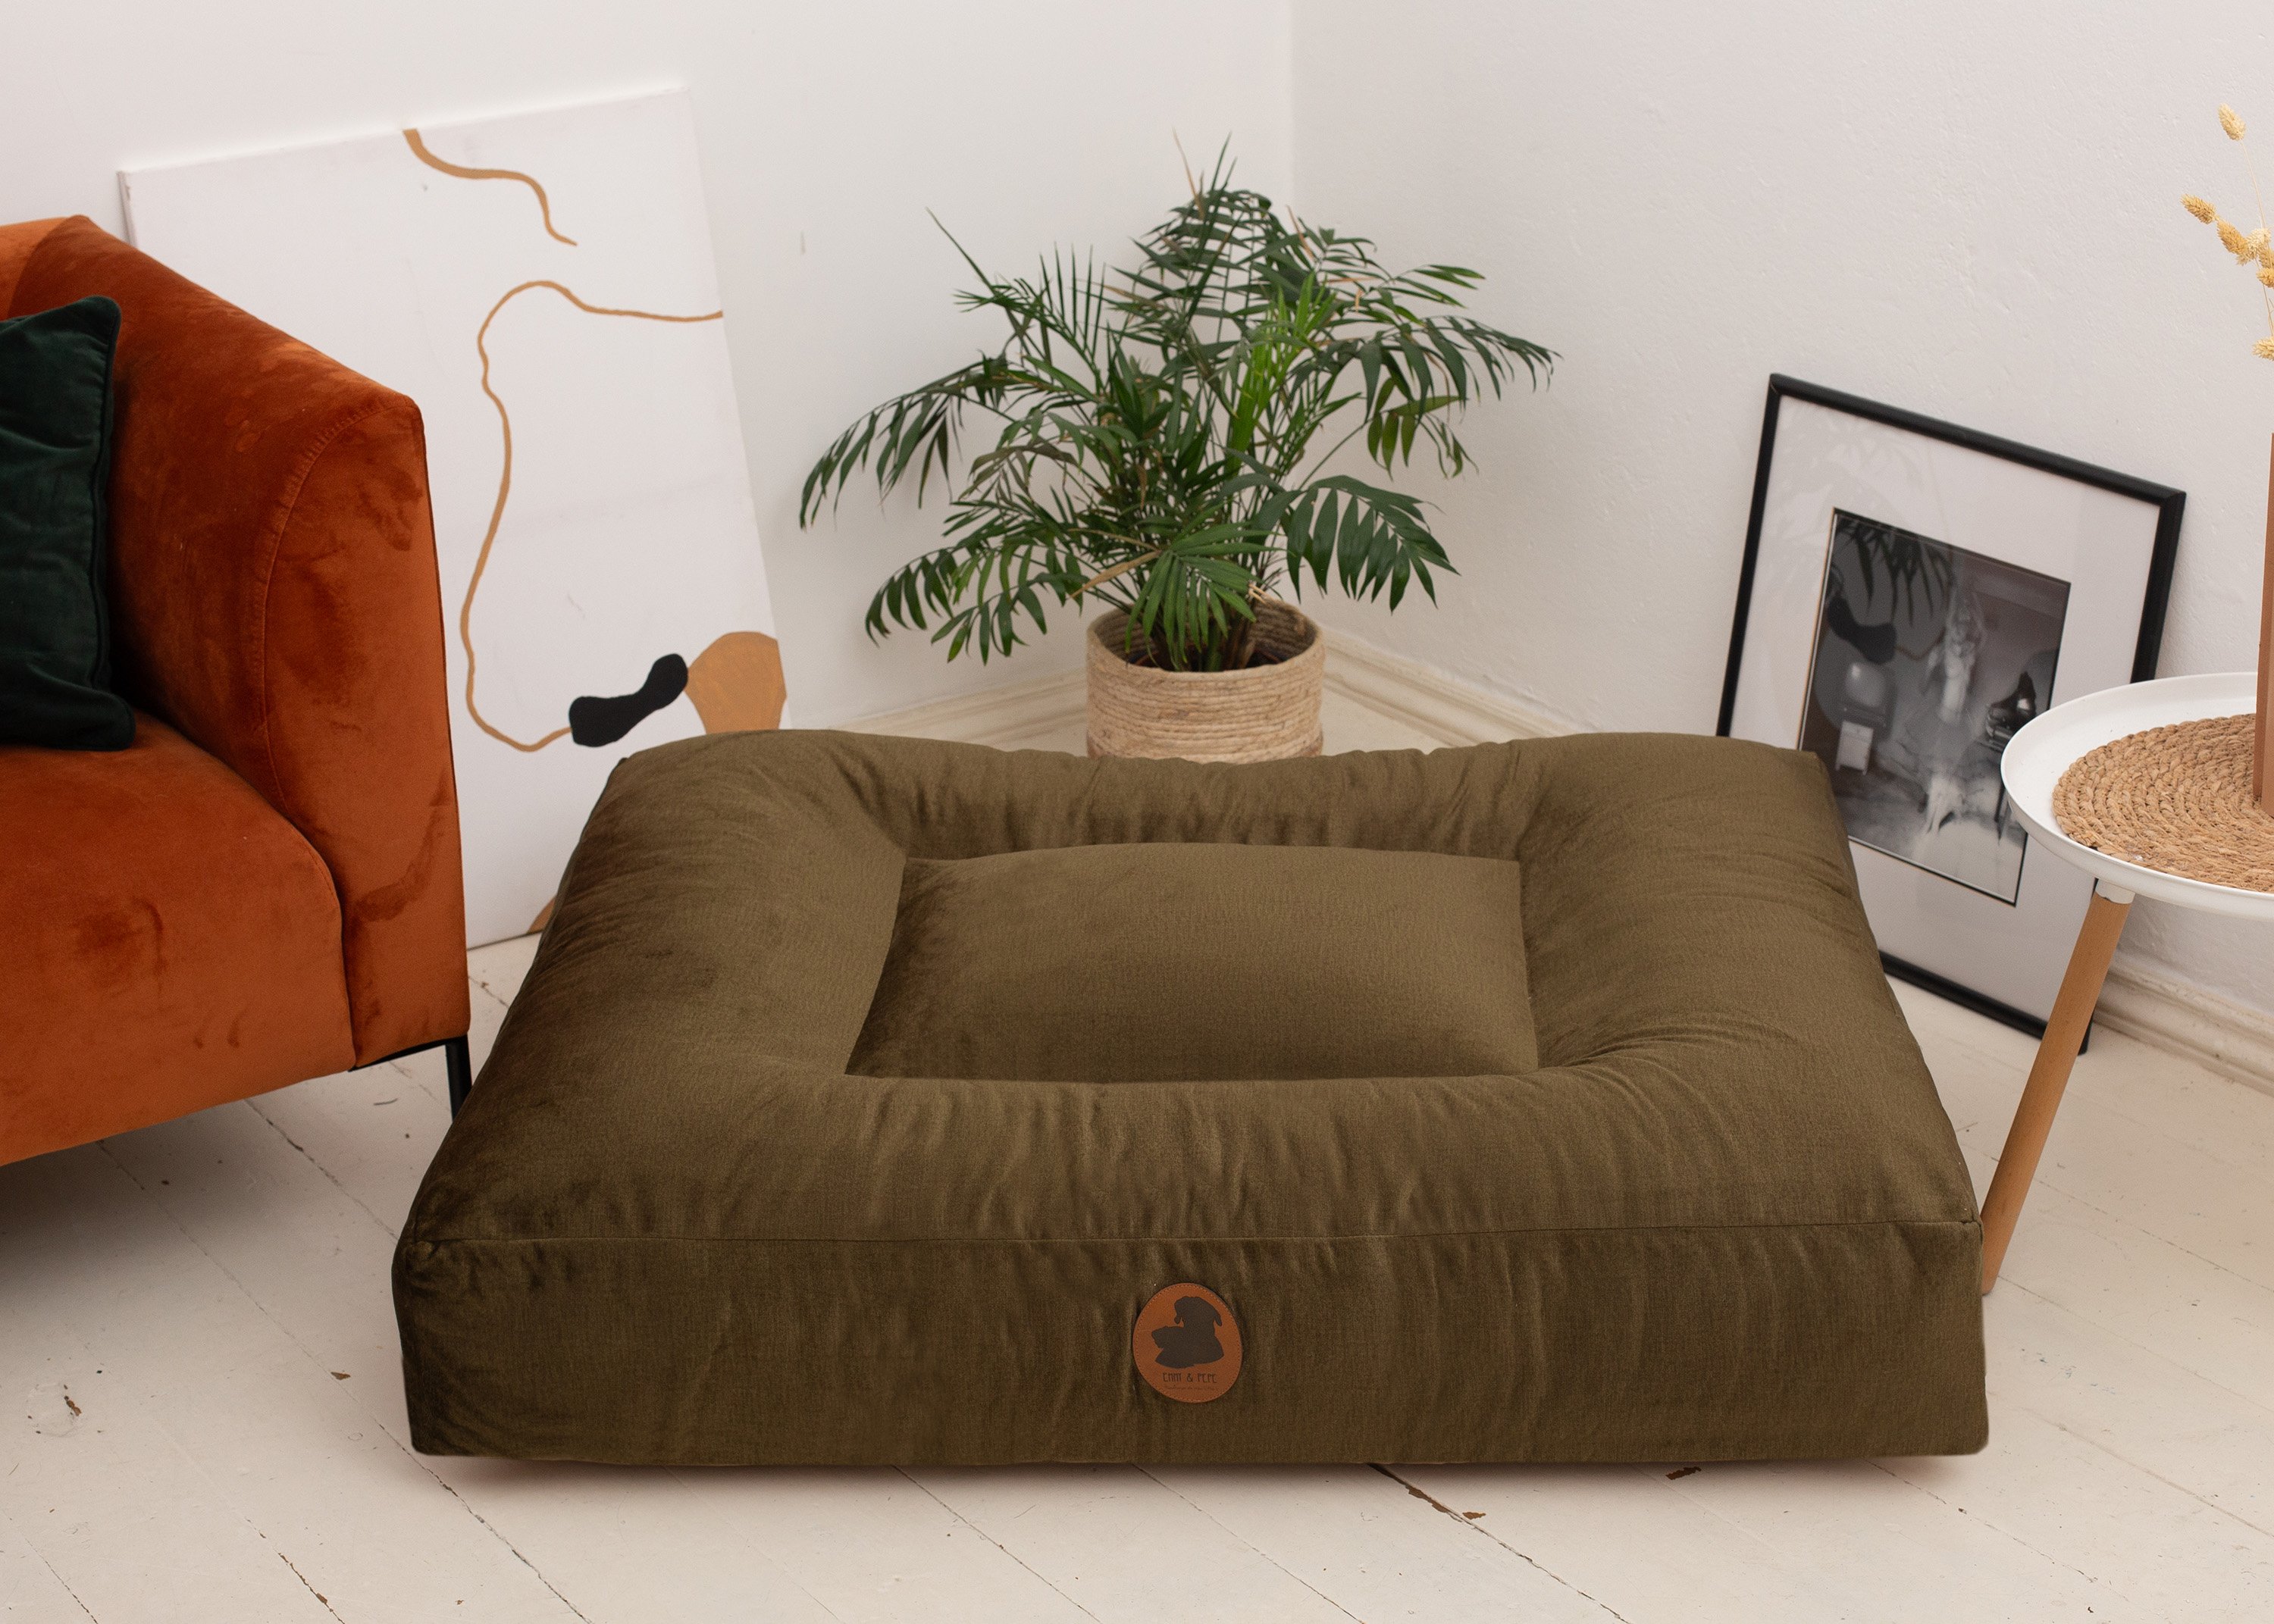 Wau-Bed Pets Friendly Olive Oval-S (80x60cm)